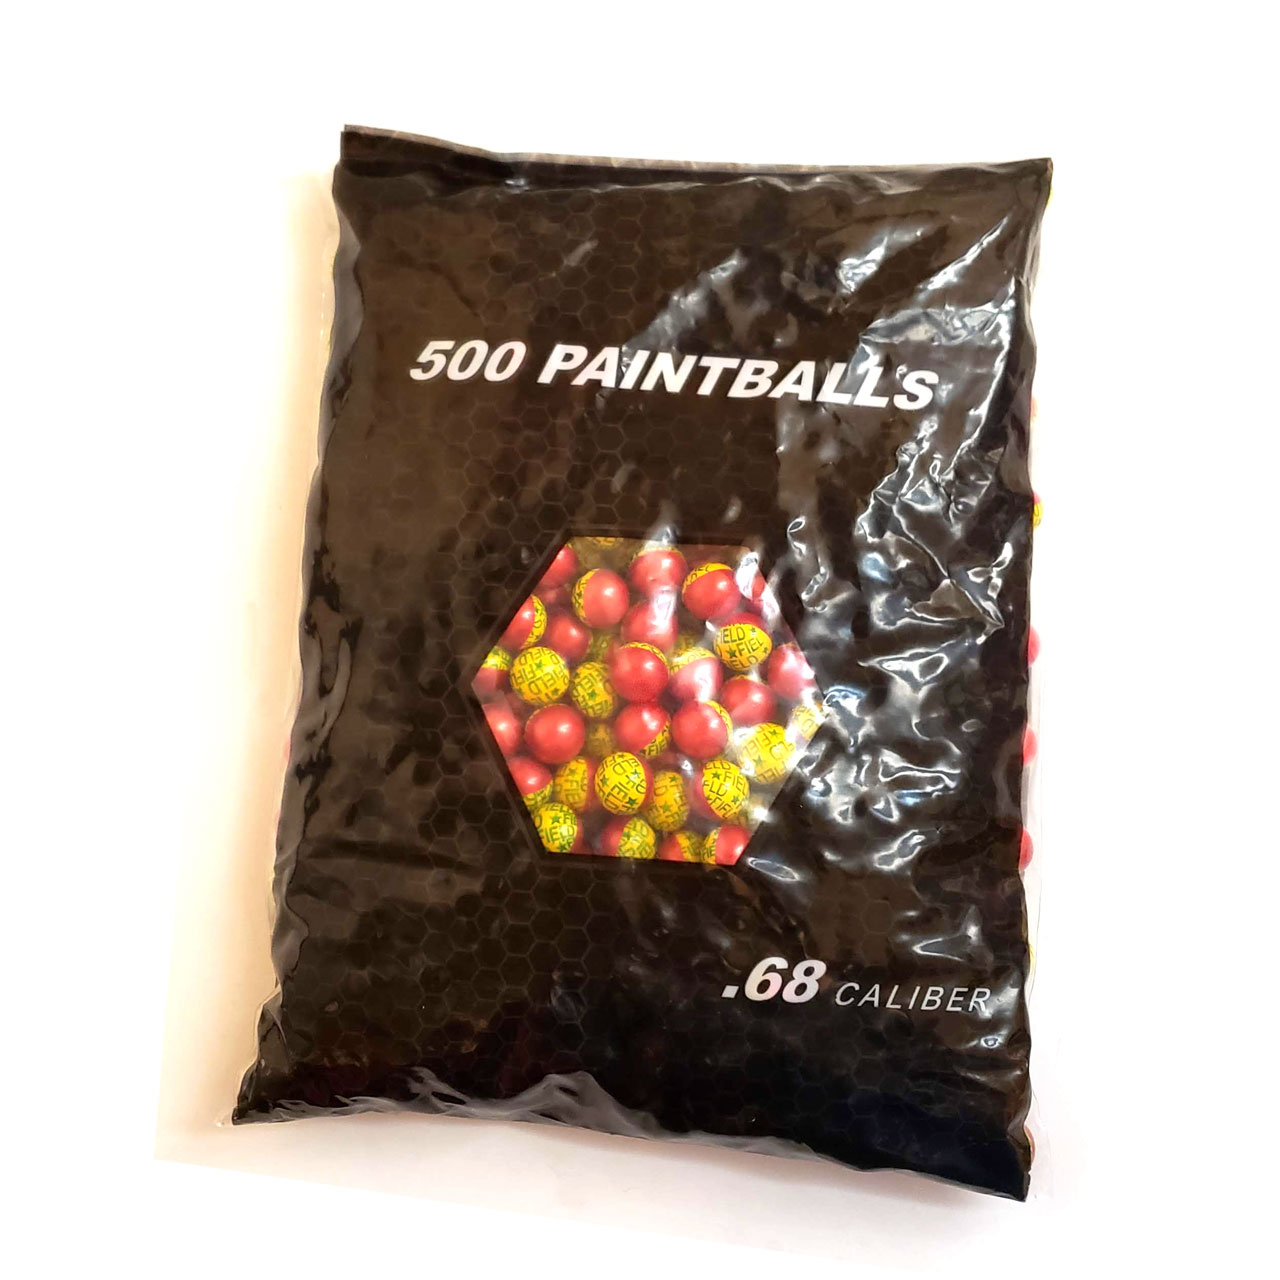 Paintballs - 500 Count